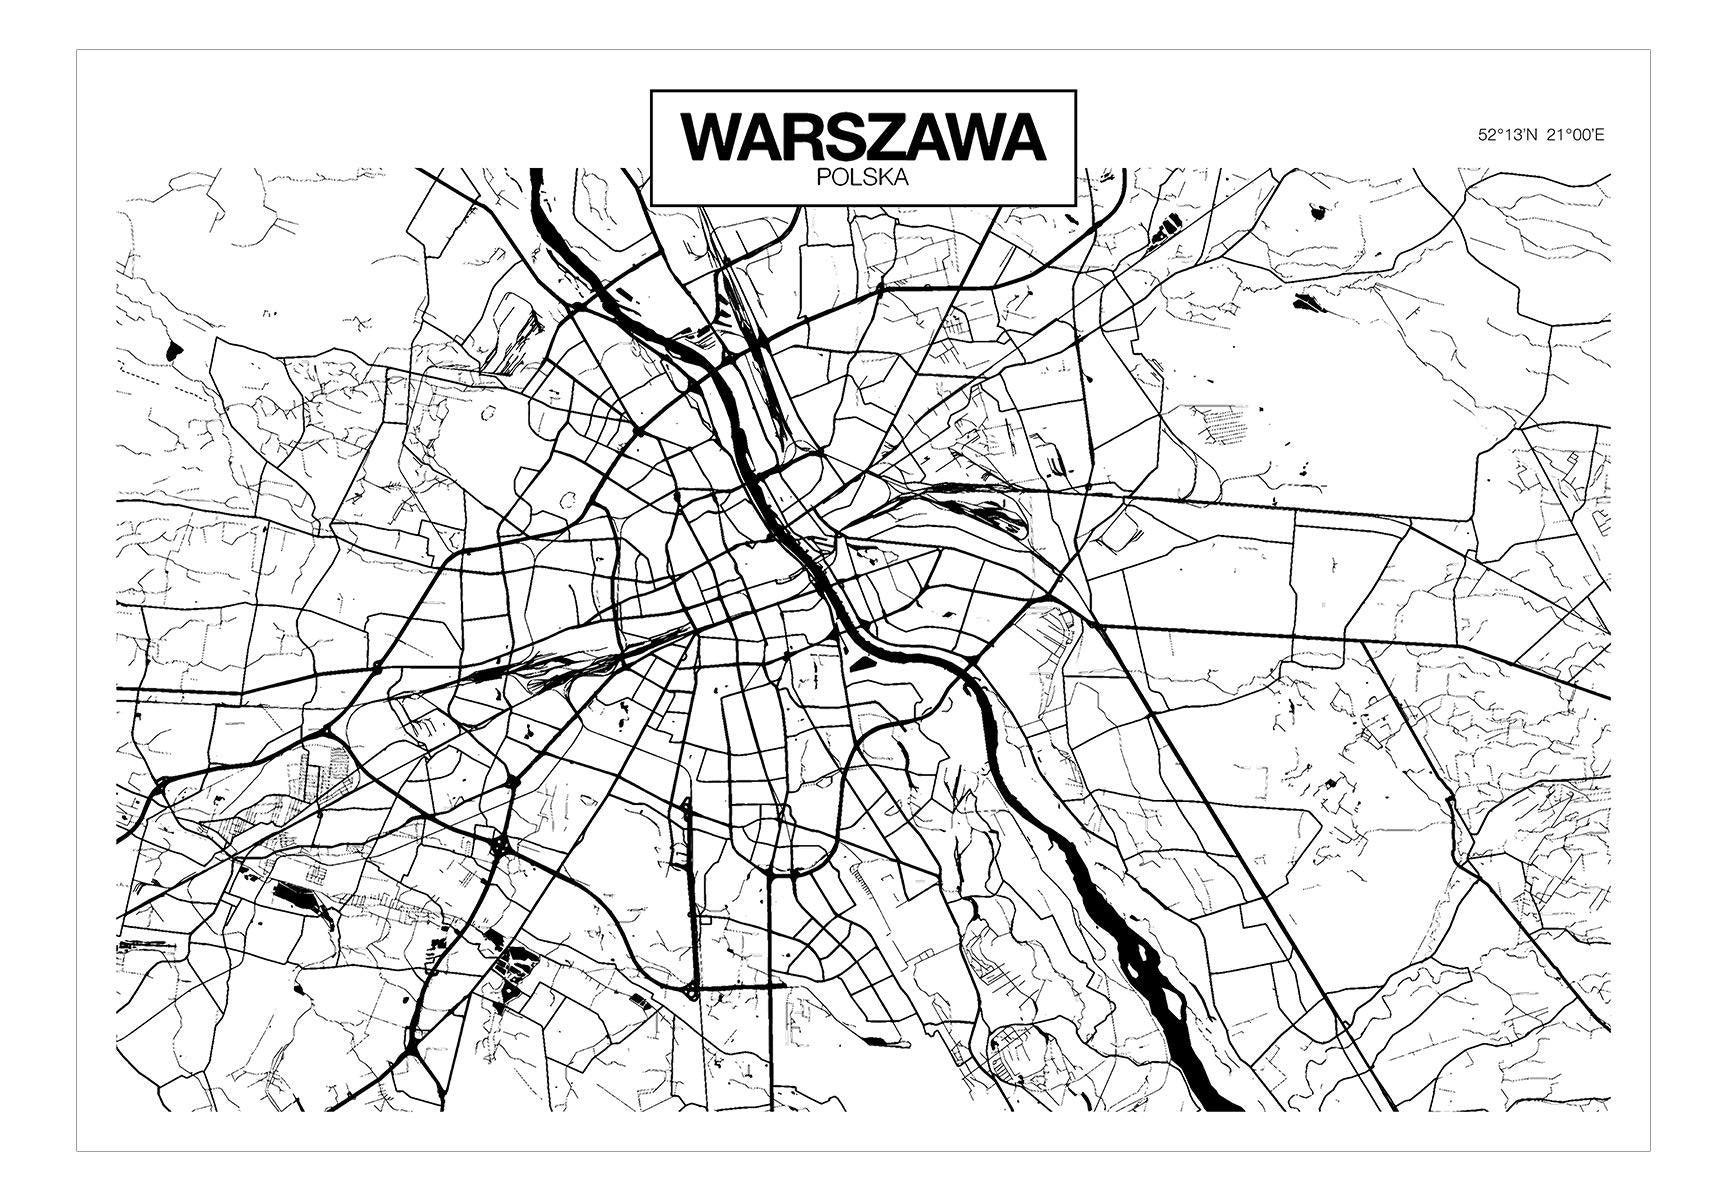 Peel and stick wall mural - Warsaw Map - www.trendingbestsellers.com